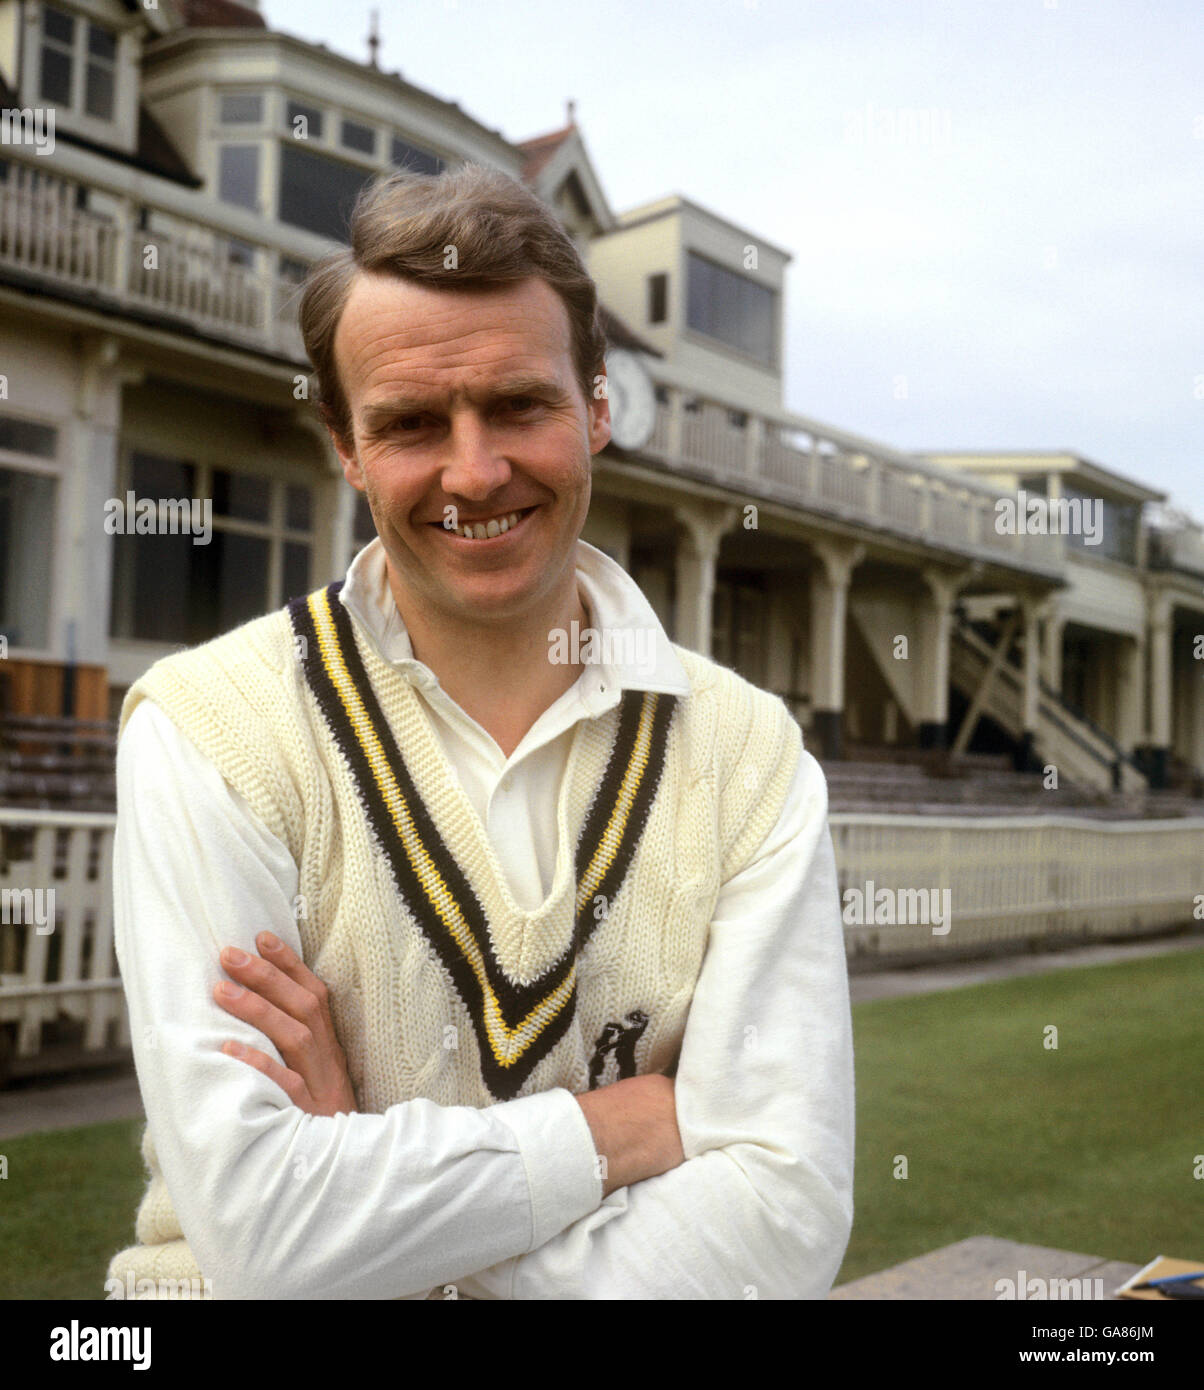 Alan Smith, Captain of Warwickshire County Cricket Club Stock Photo